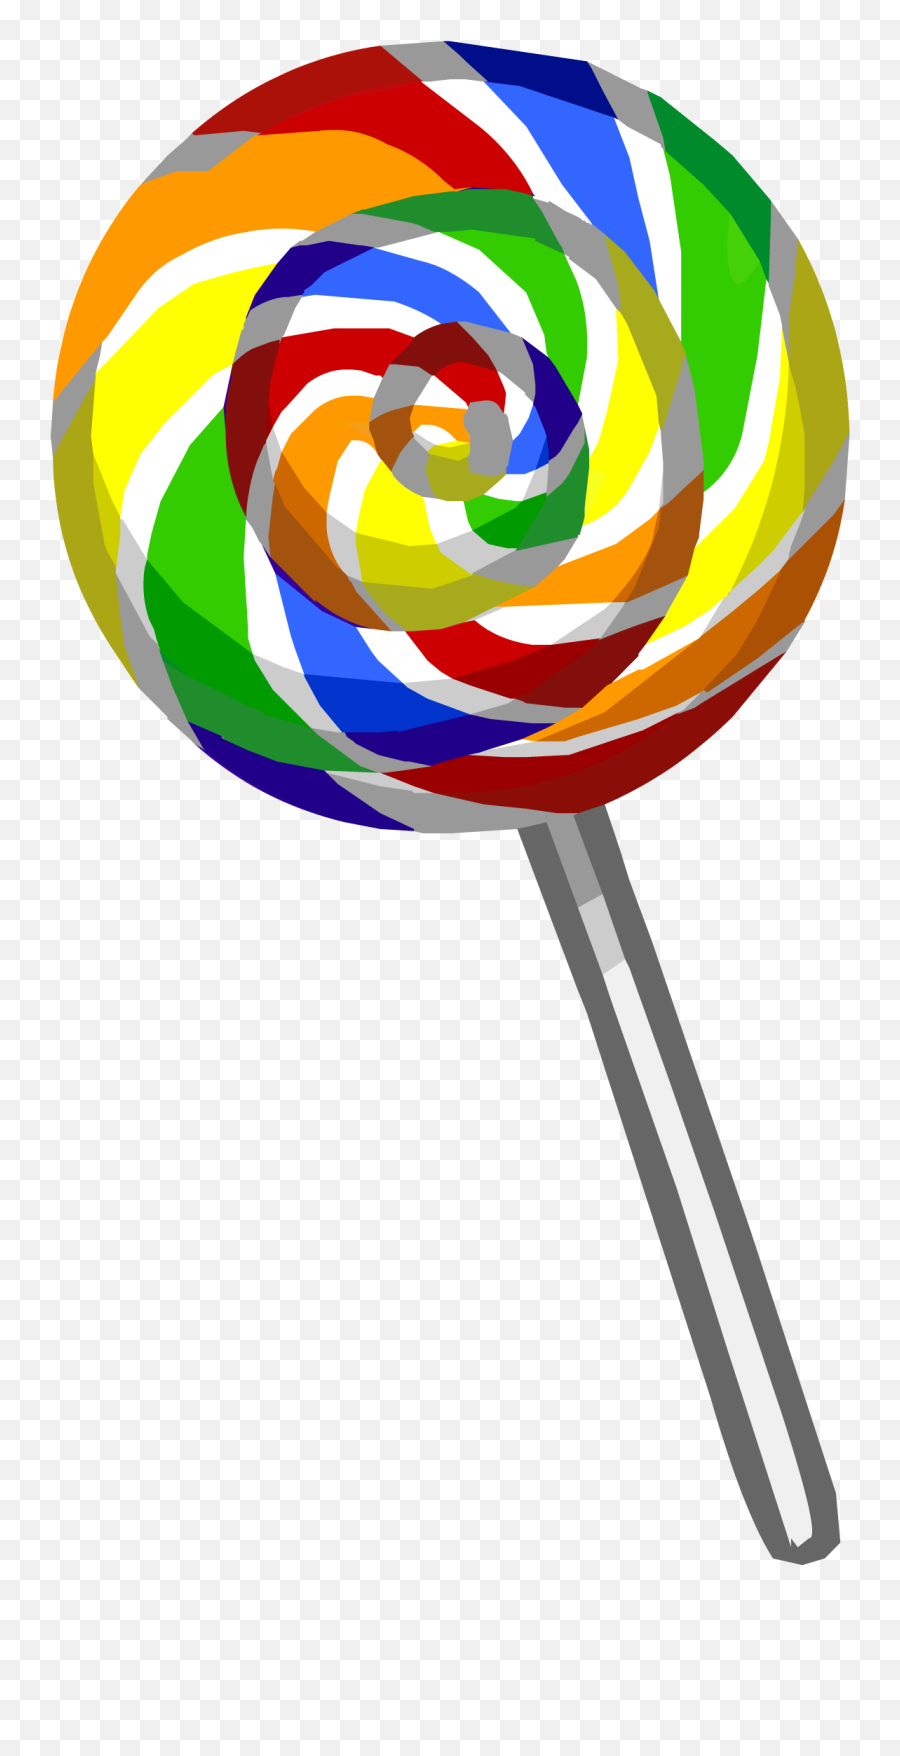 Rainbow Lollipop - Clipart Transparent Background Lollipop Emoji,Pics Of The Lolipop Emojis